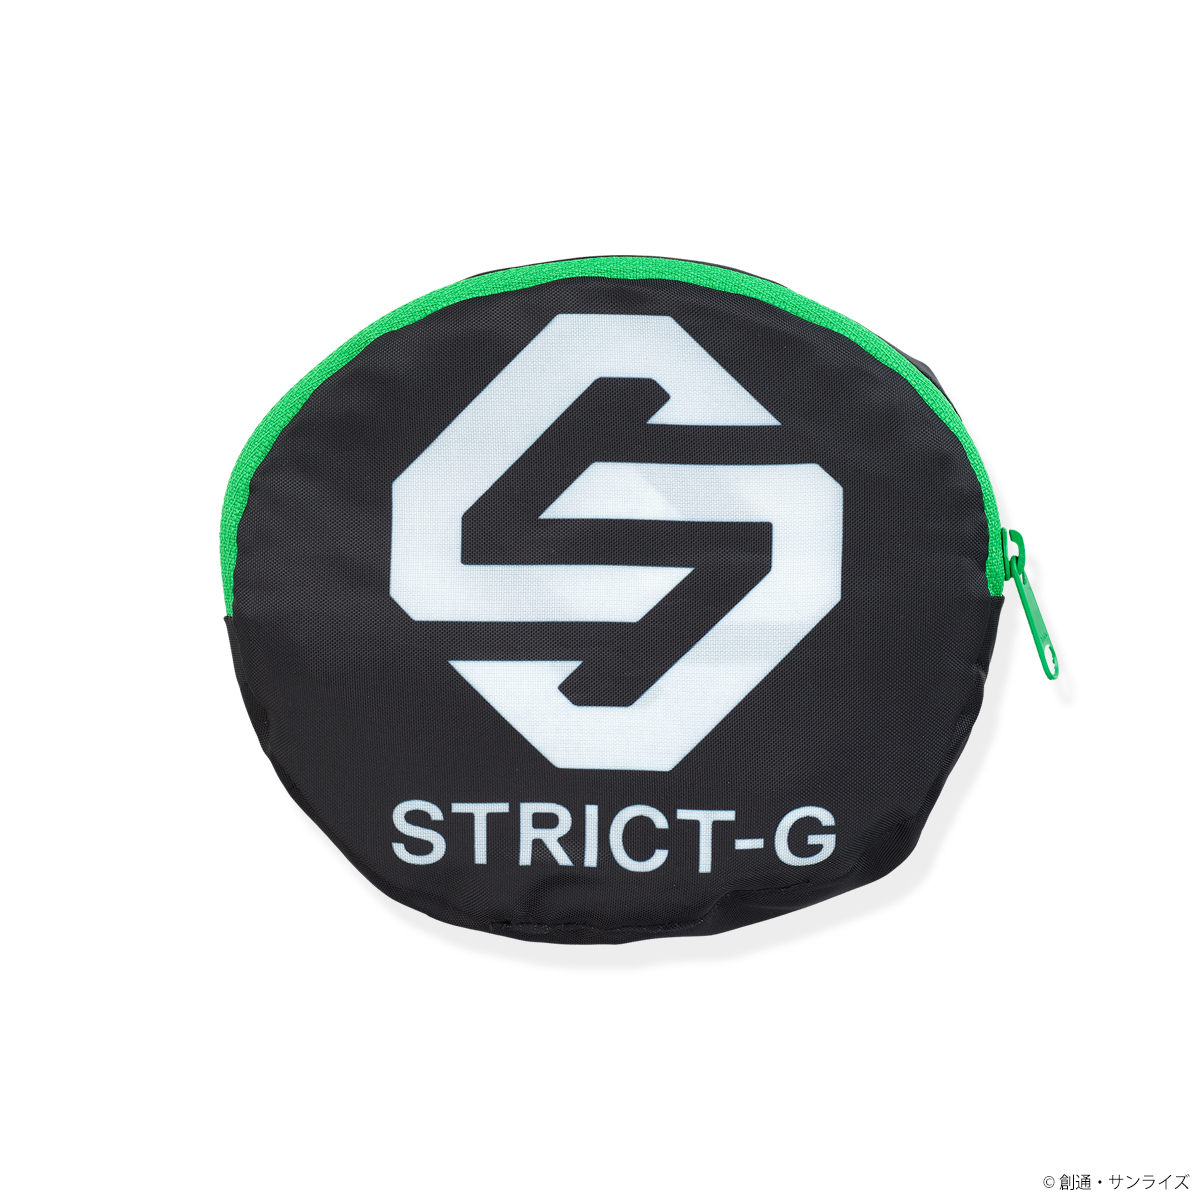 「STRICT-G」POP UPショップ 横浜ワールドポーターズに期間限定でオープン！